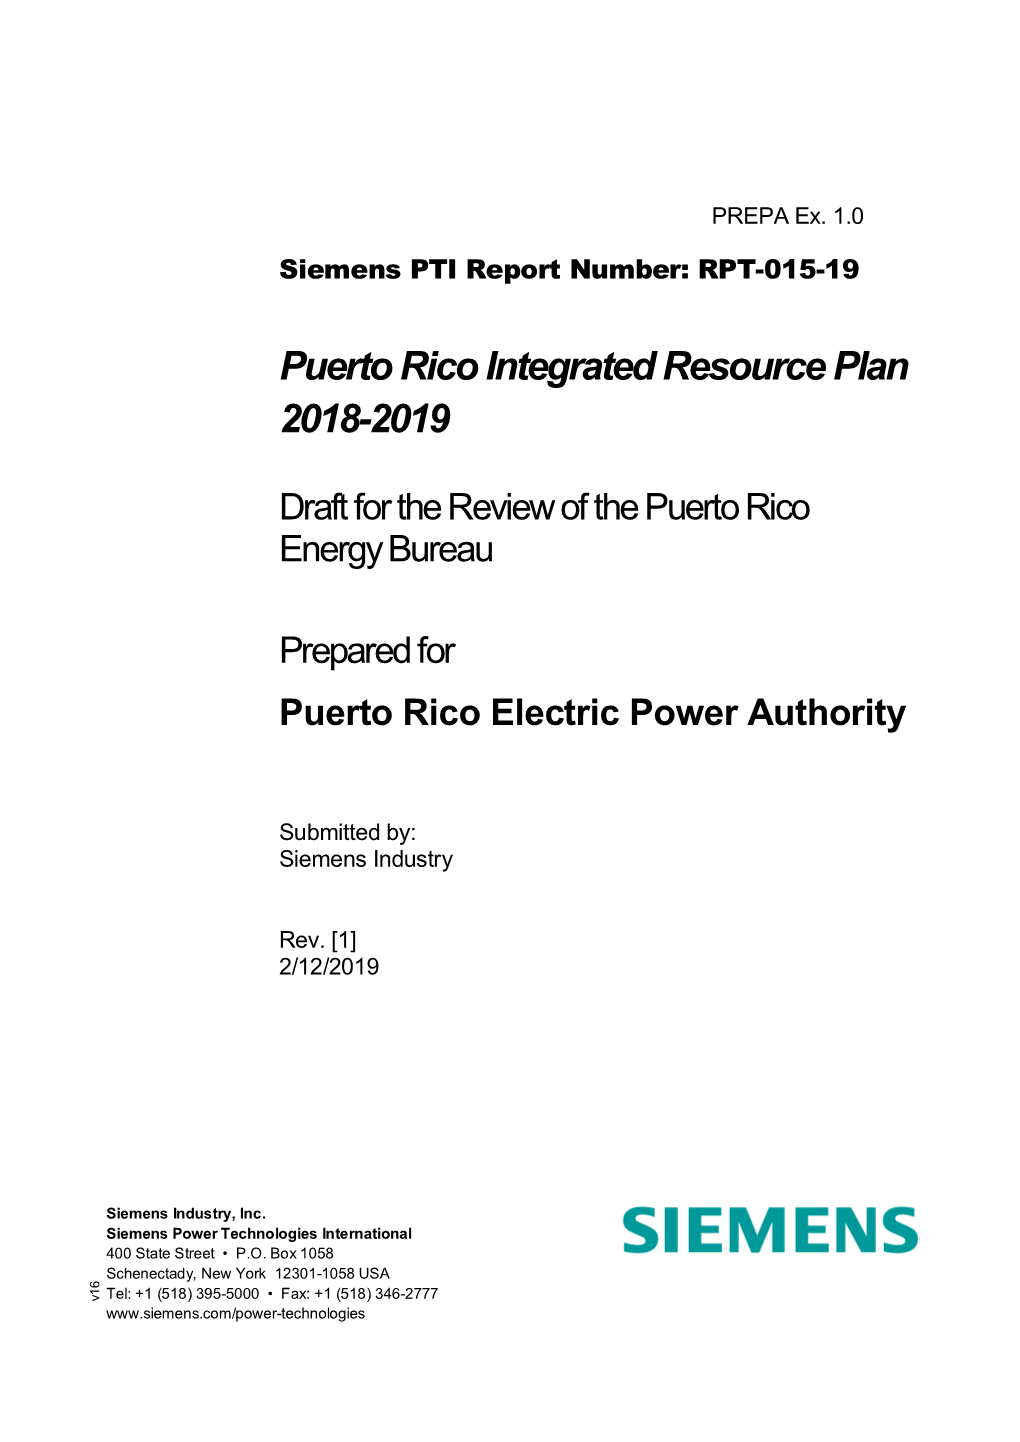 Puerto Rico Integrated Resource Plan 2018-2019